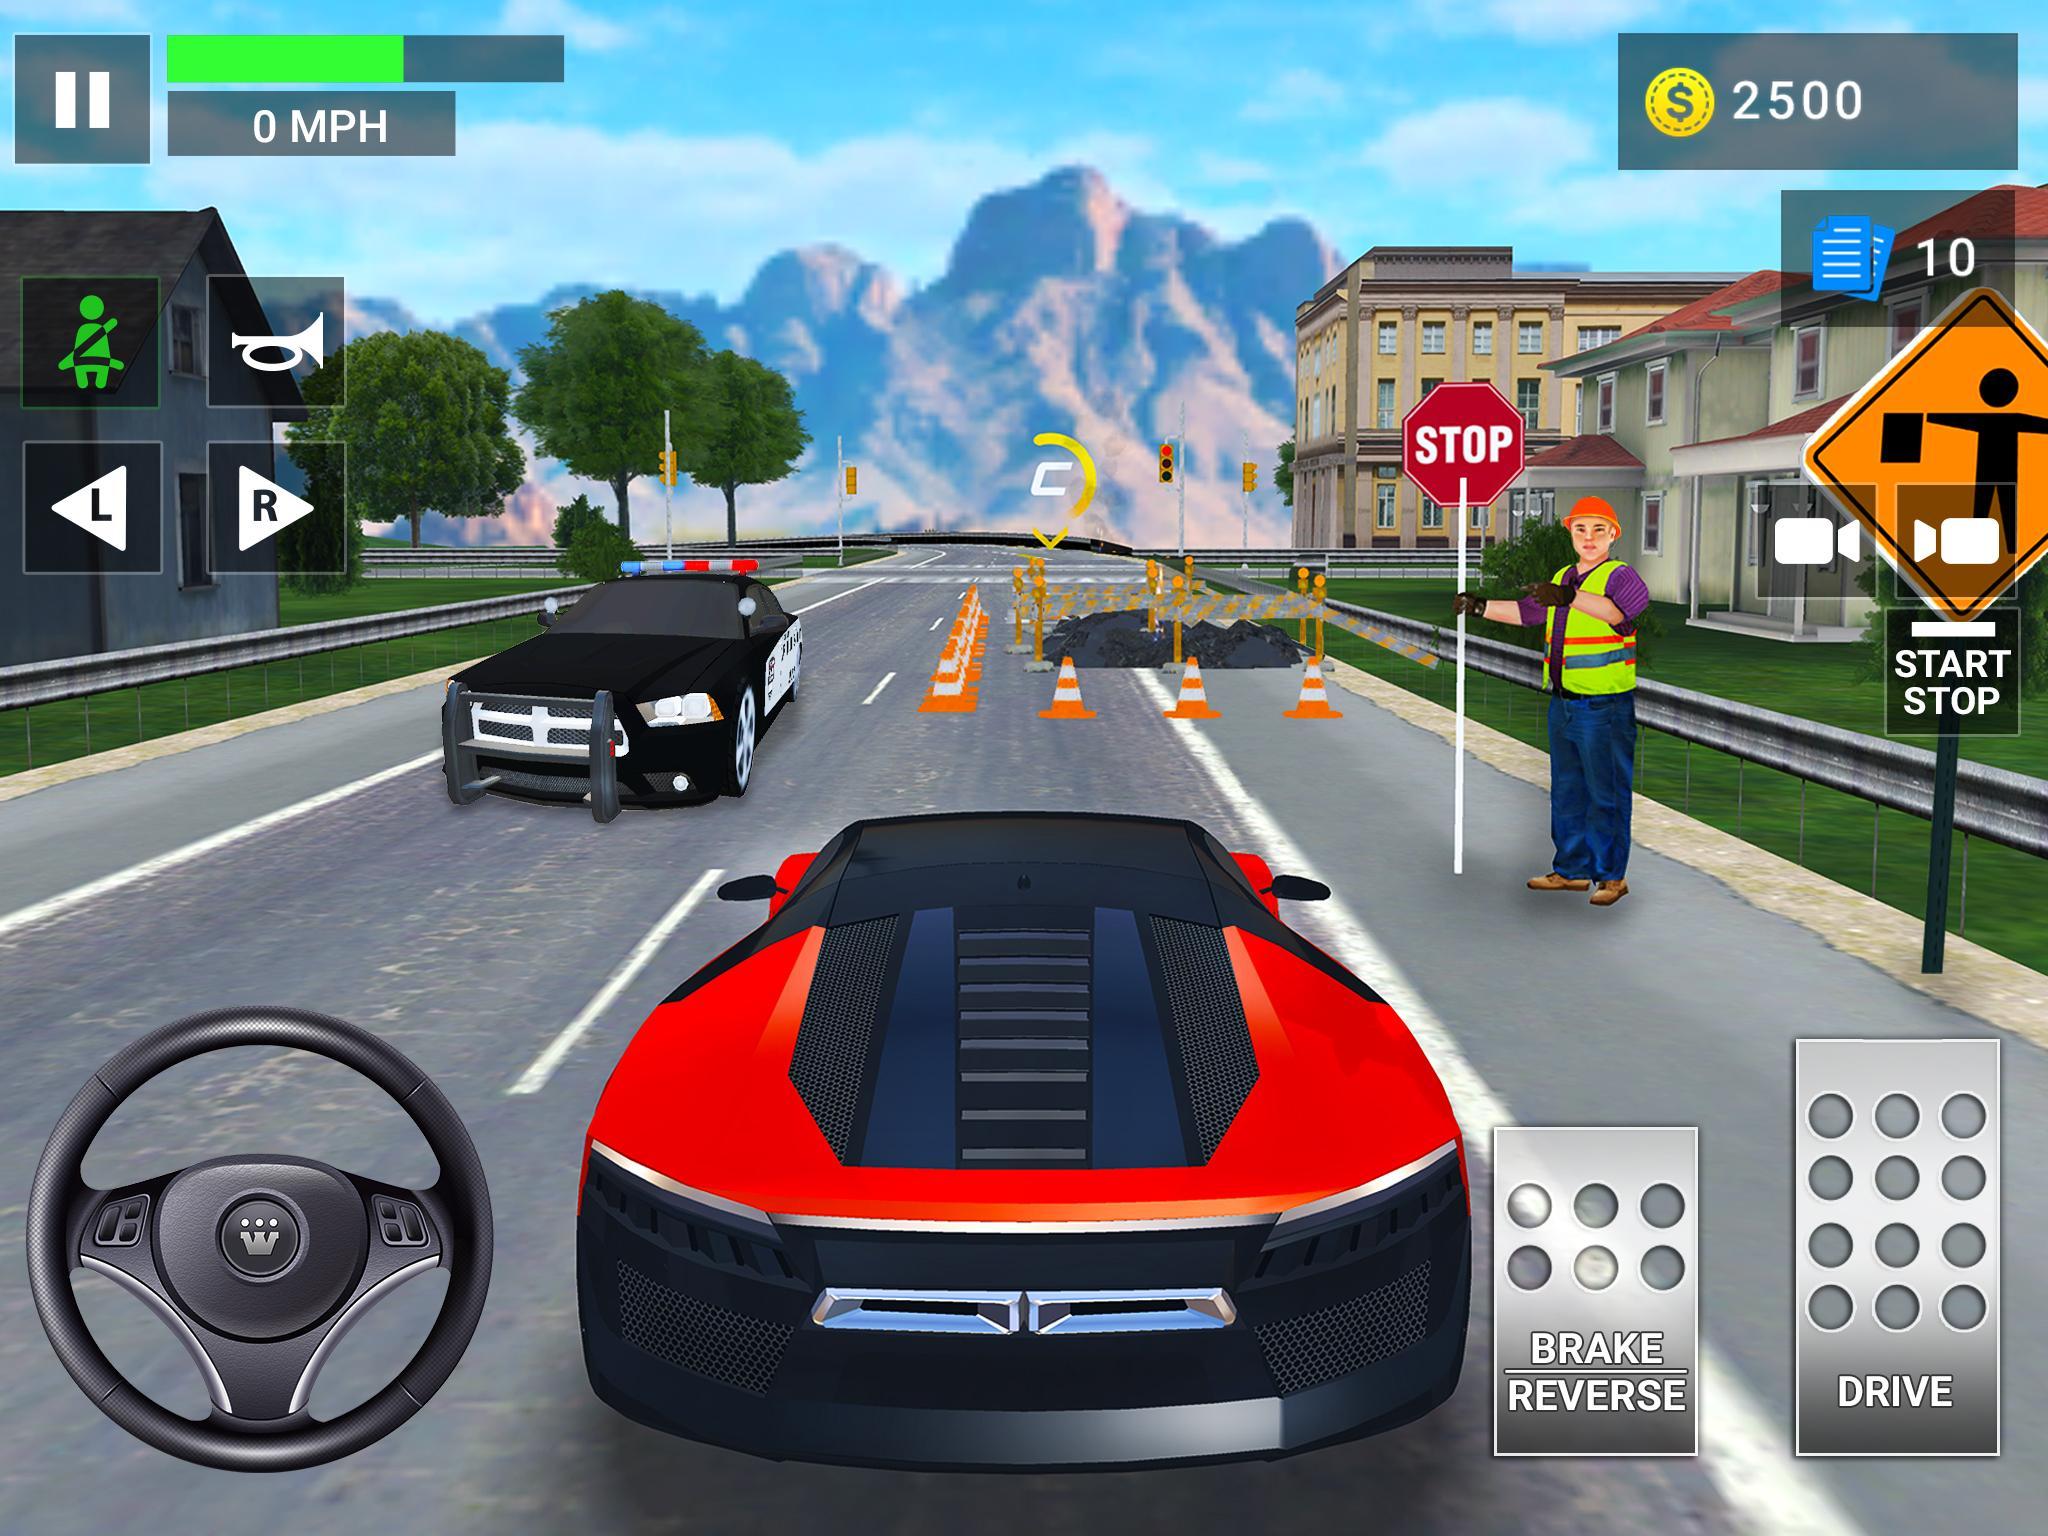 Driving Academy 2 Car Games & Driving School 2021 2.1 Screenshot 11